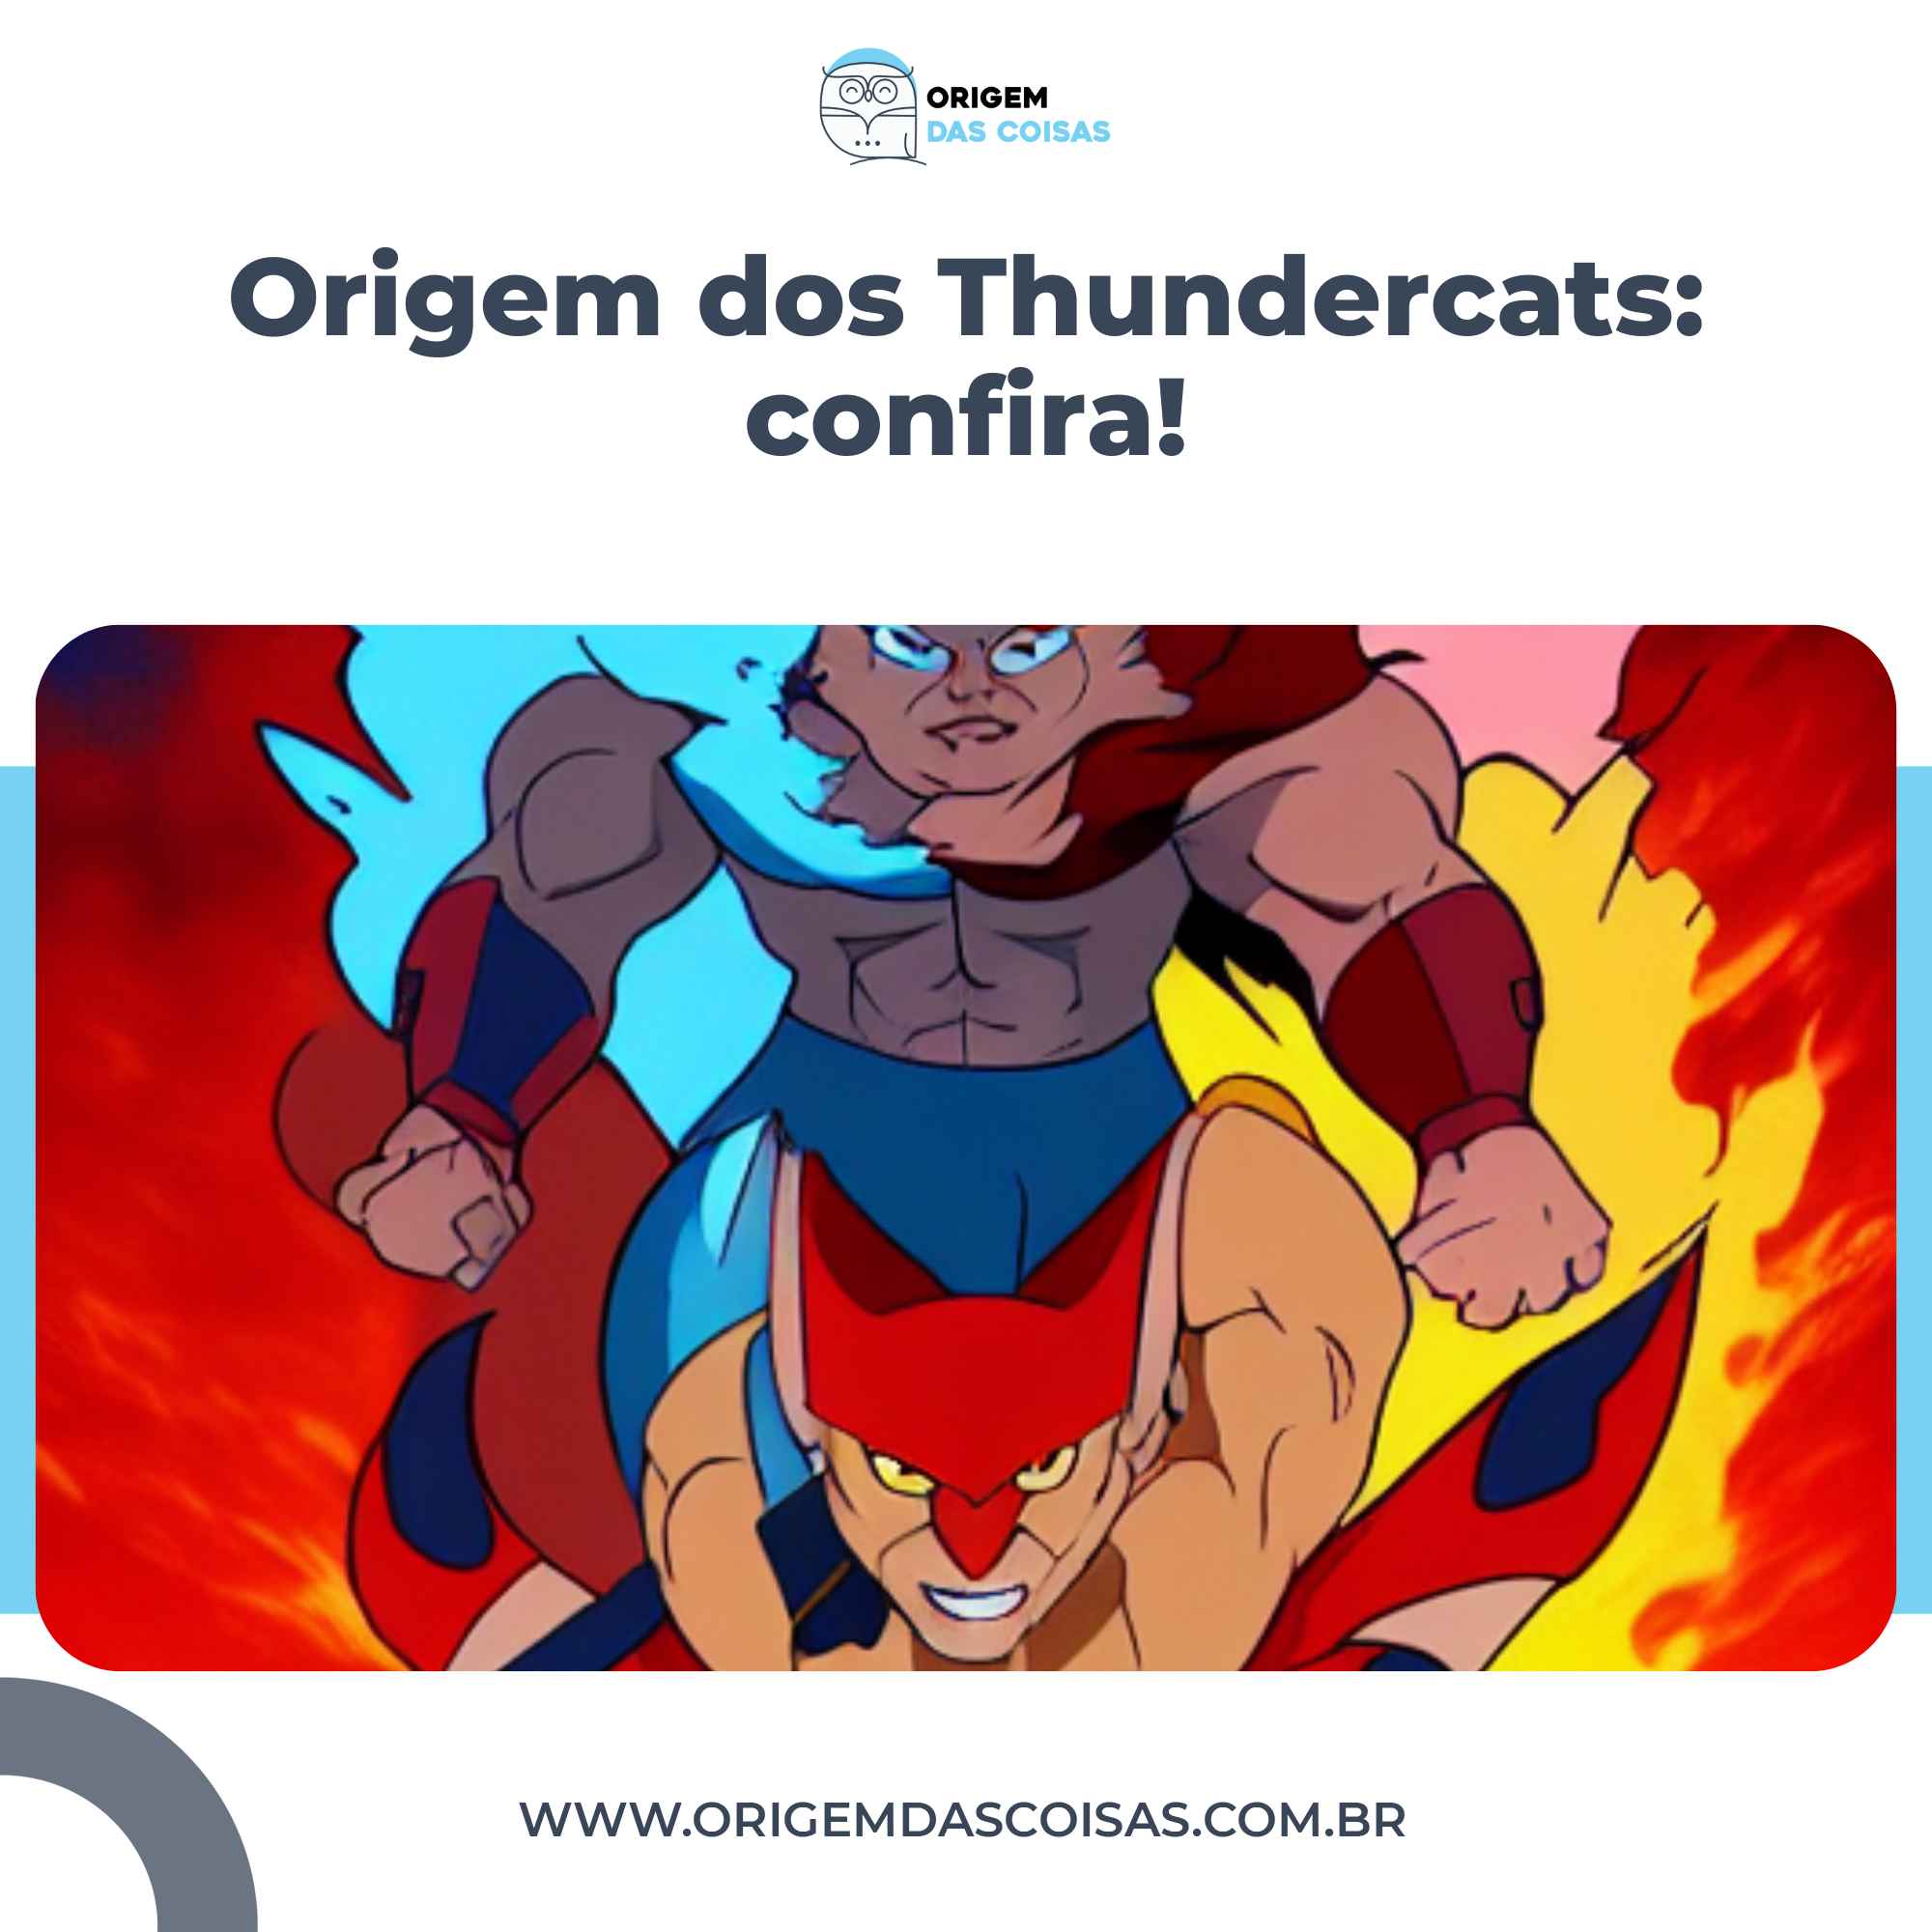 Origem dos Thundercats confira!